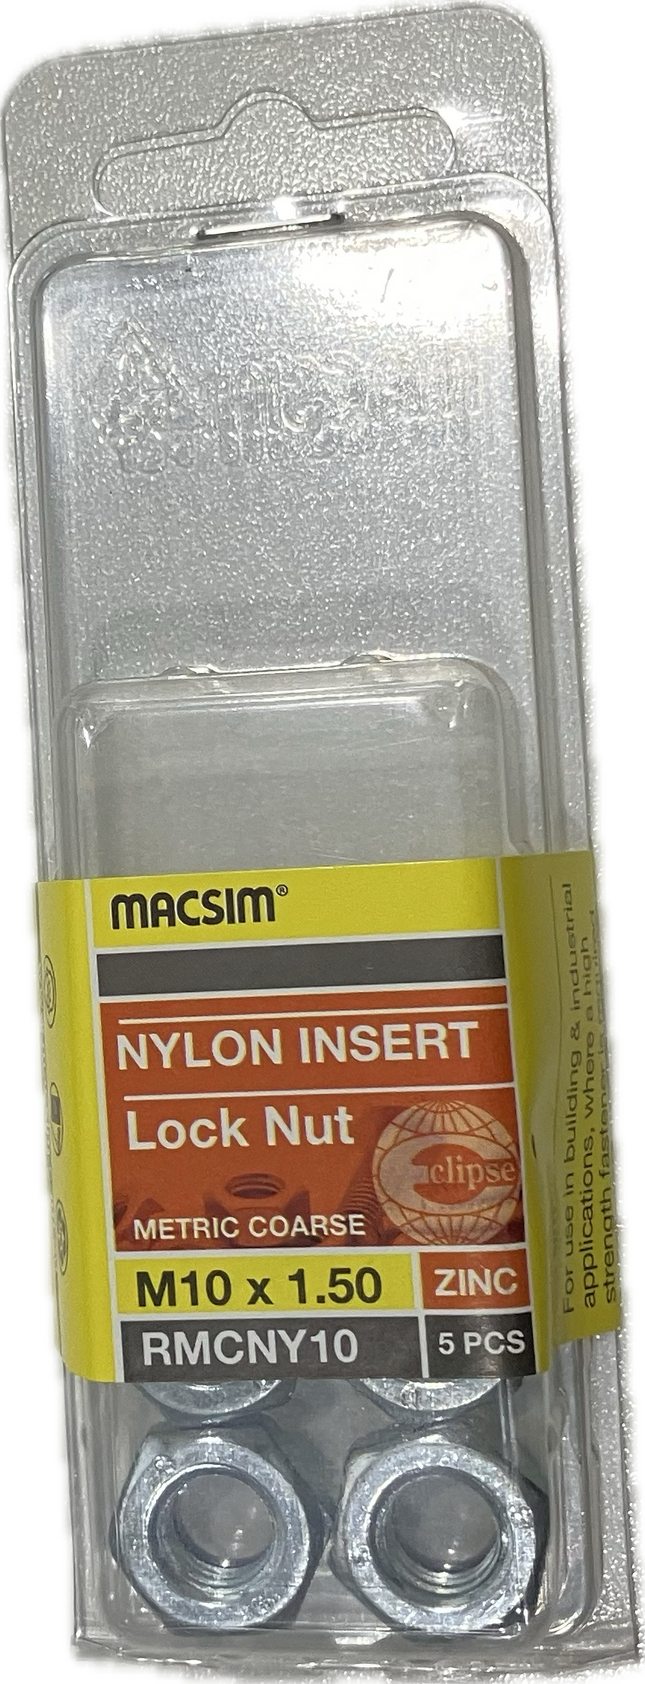 MACSIM HEX HEAD MATRIC COARSE NYLON INSERT ZINC PLATED M10 LOCK NUT (BLISTER PACK OF 5)